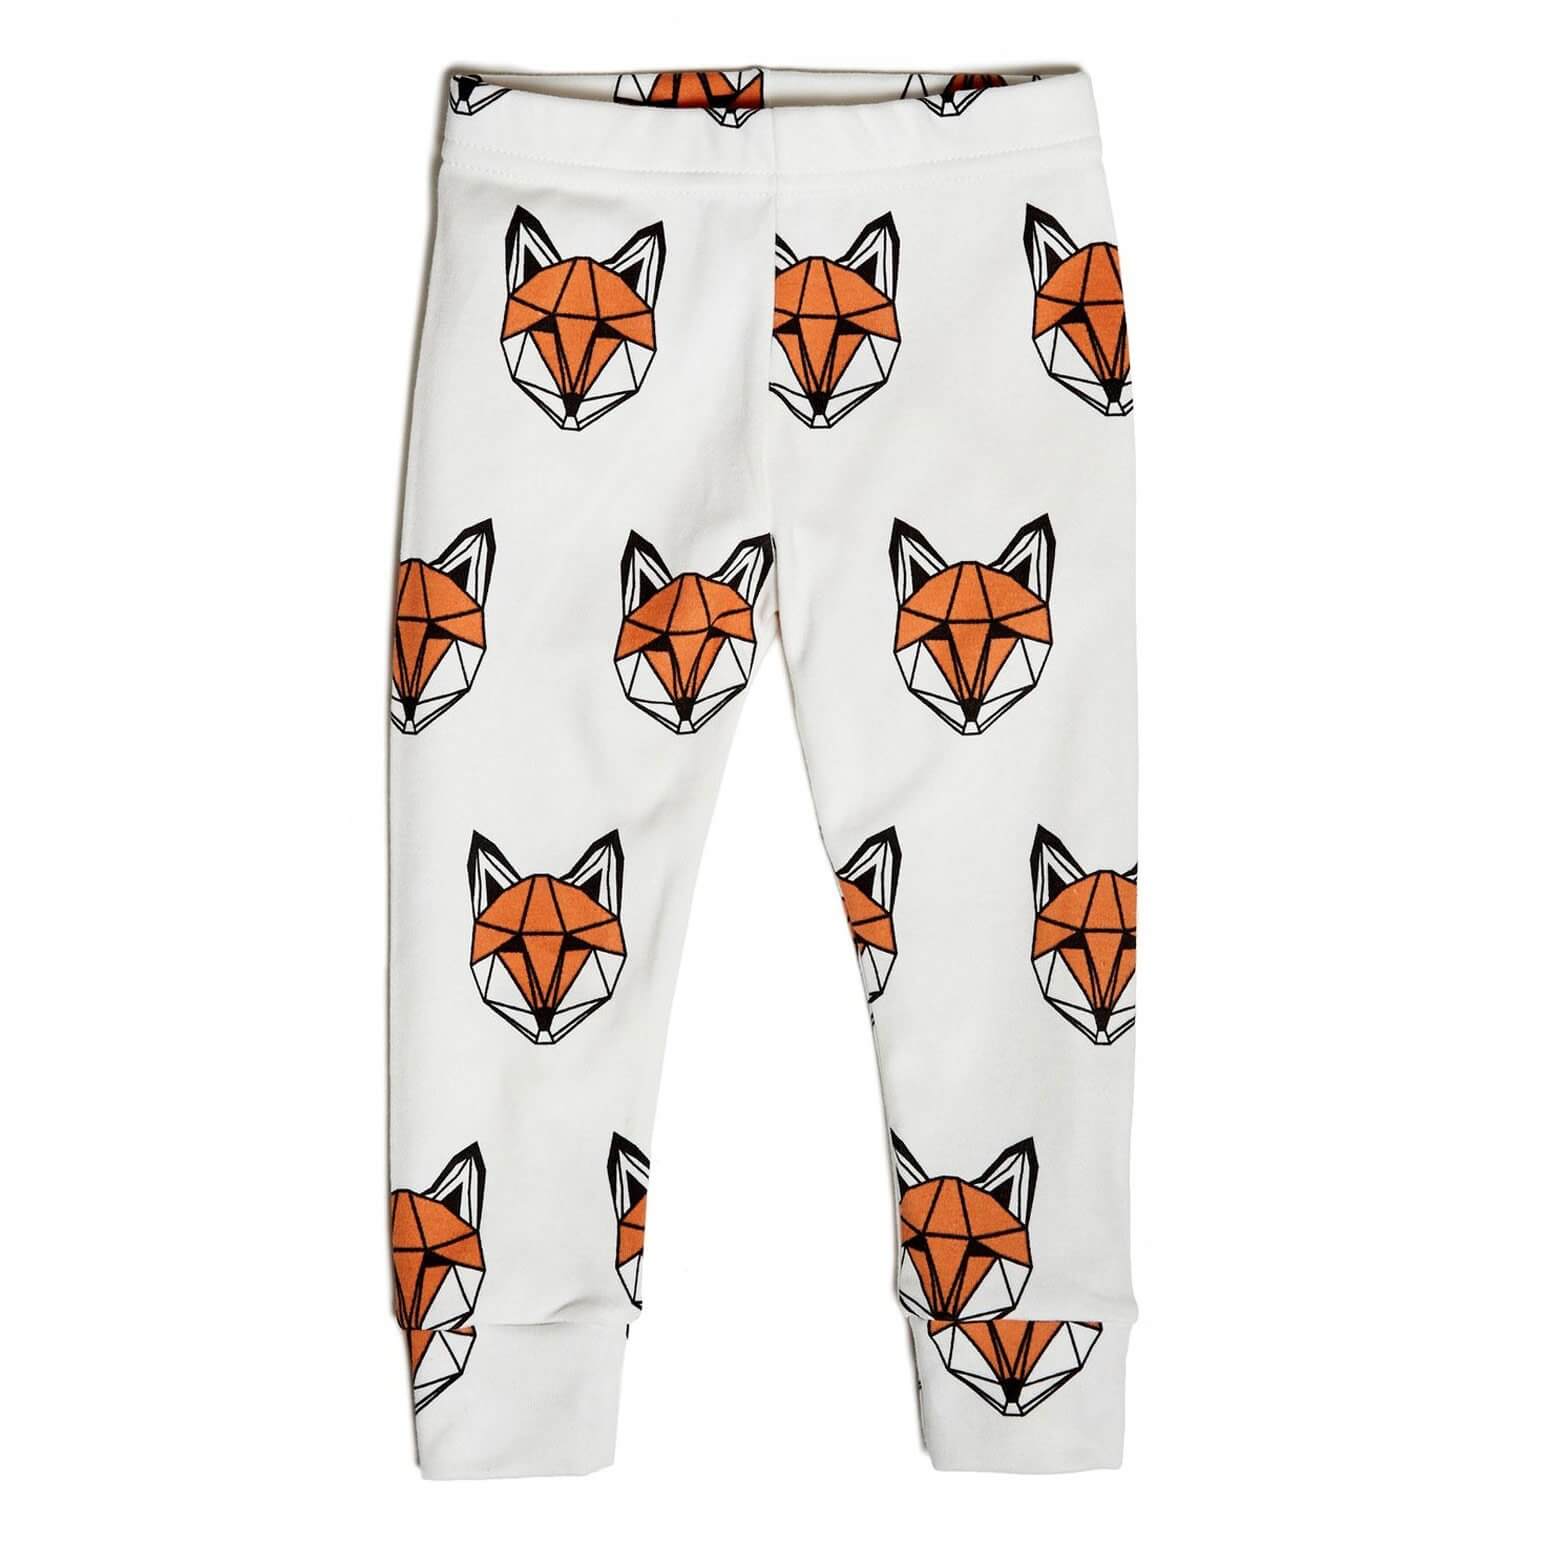 Just Call Me Fox organic cotton leggings – Tobias & the Bear